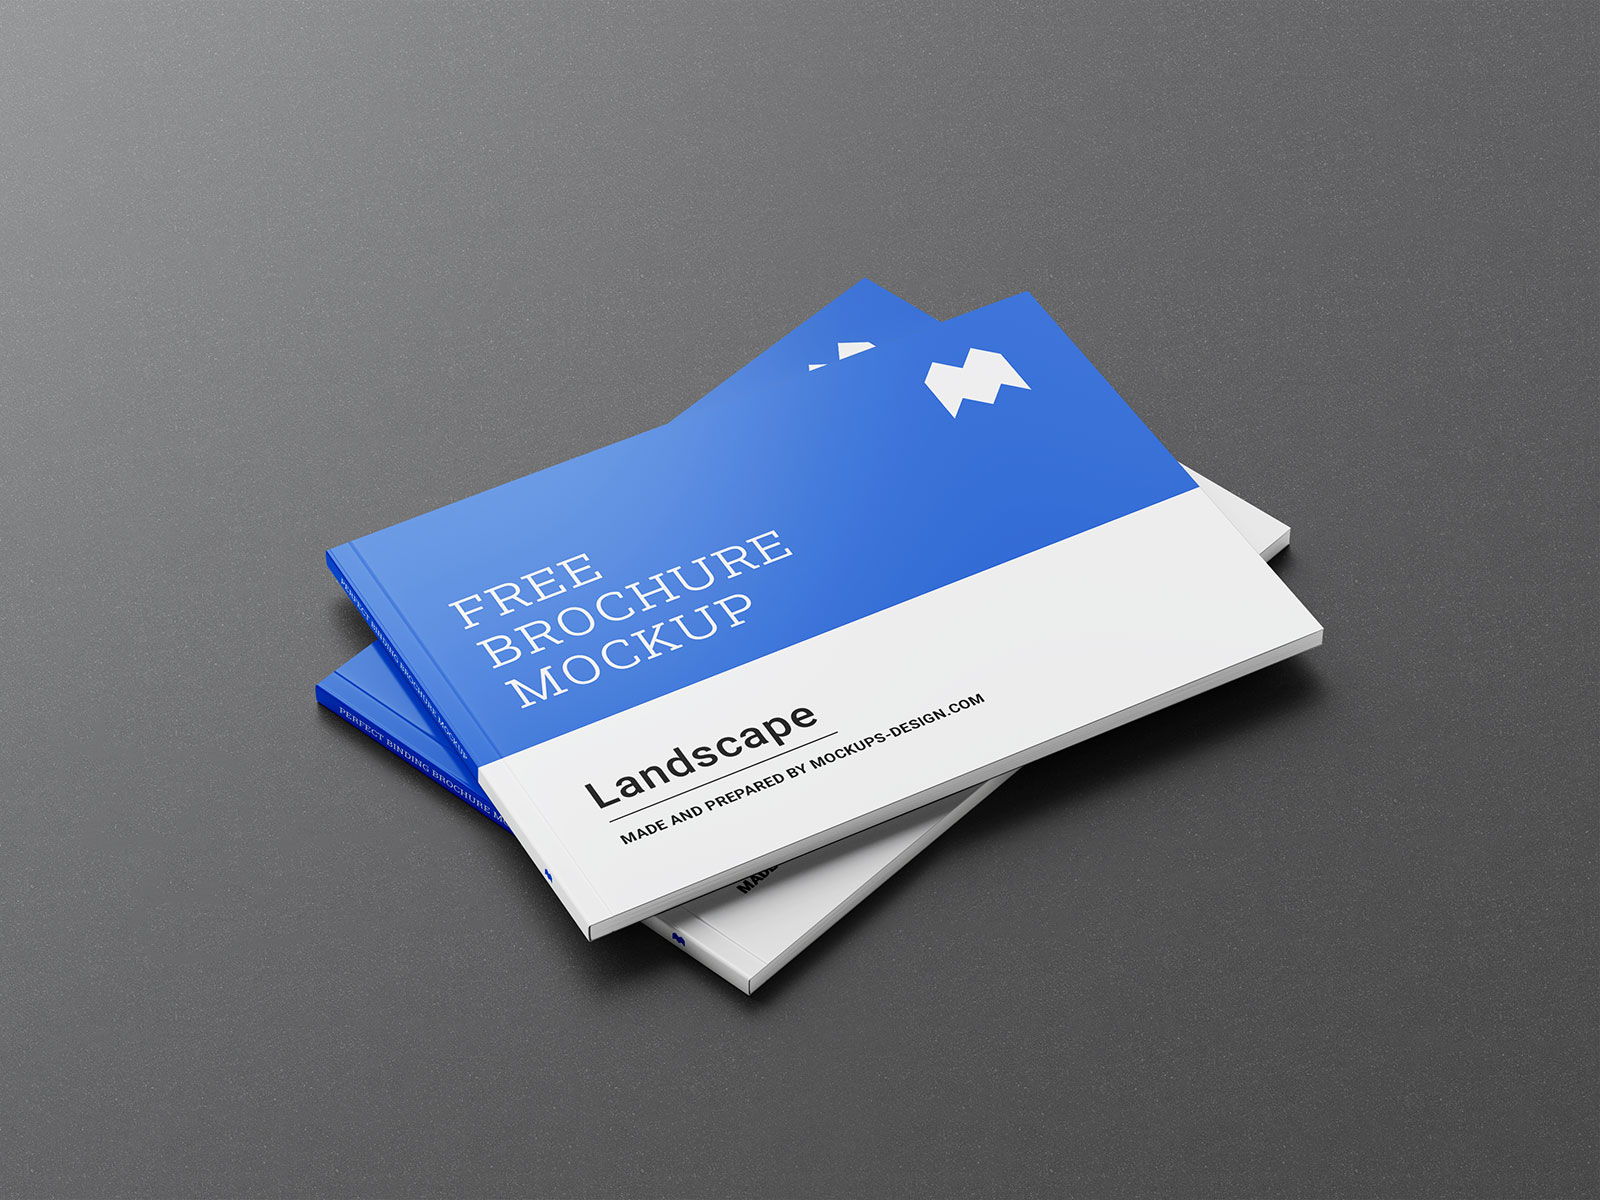 Free Landscape Executive Perfect Binding Brochure Magazine Mockup PSD Set (1)